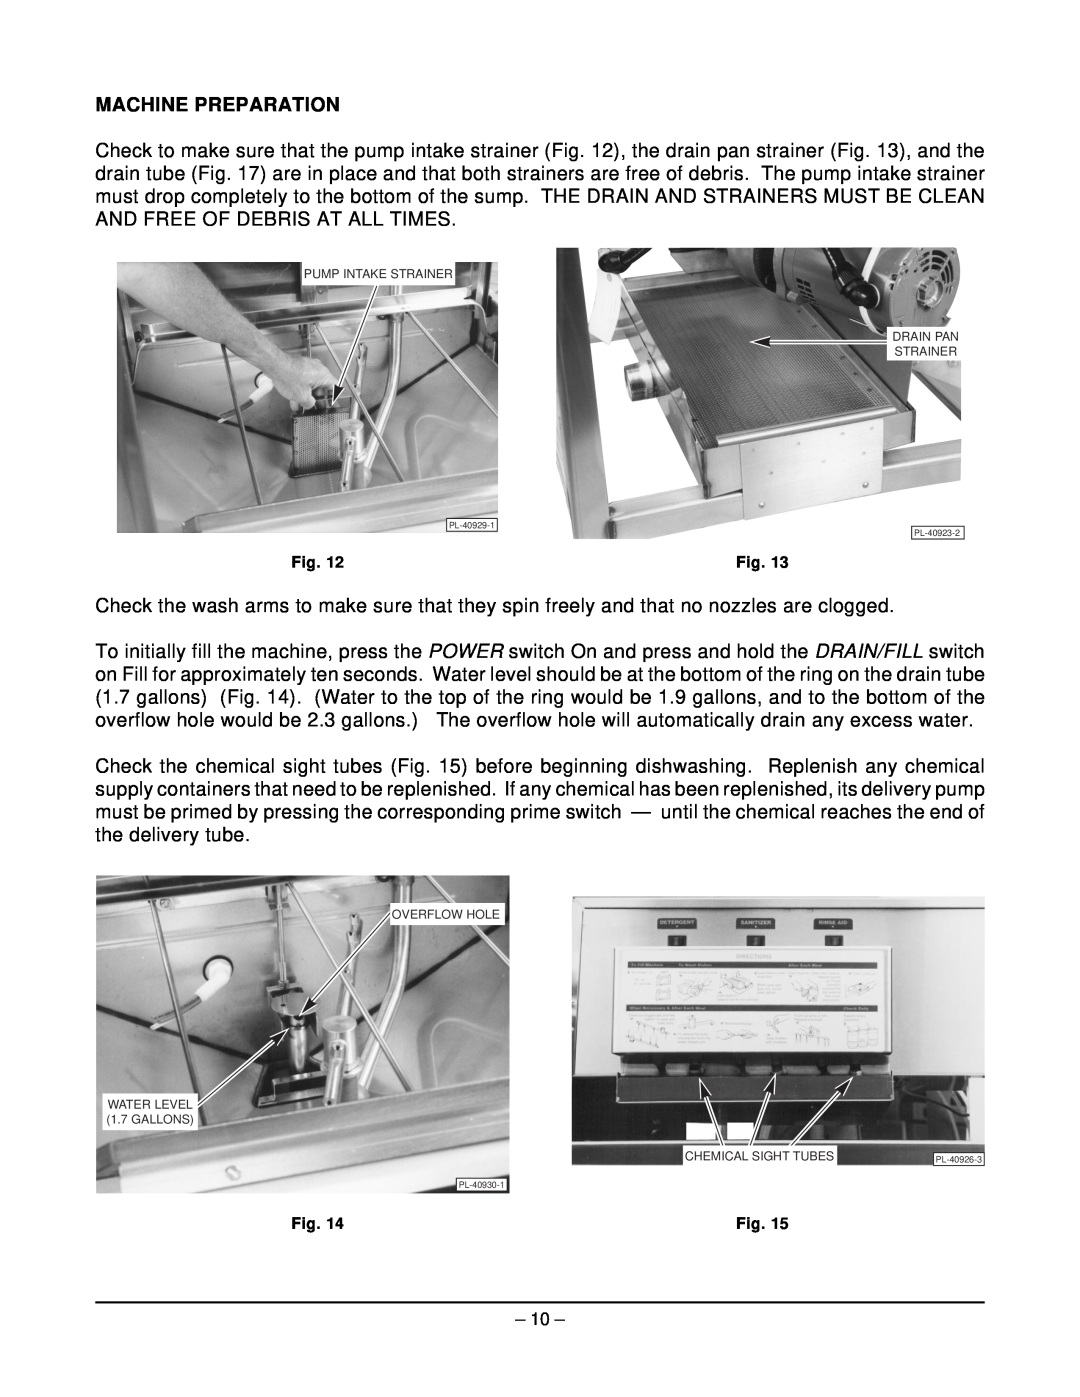 Hobart LT1 ML-104239 manual Machine Preparation 